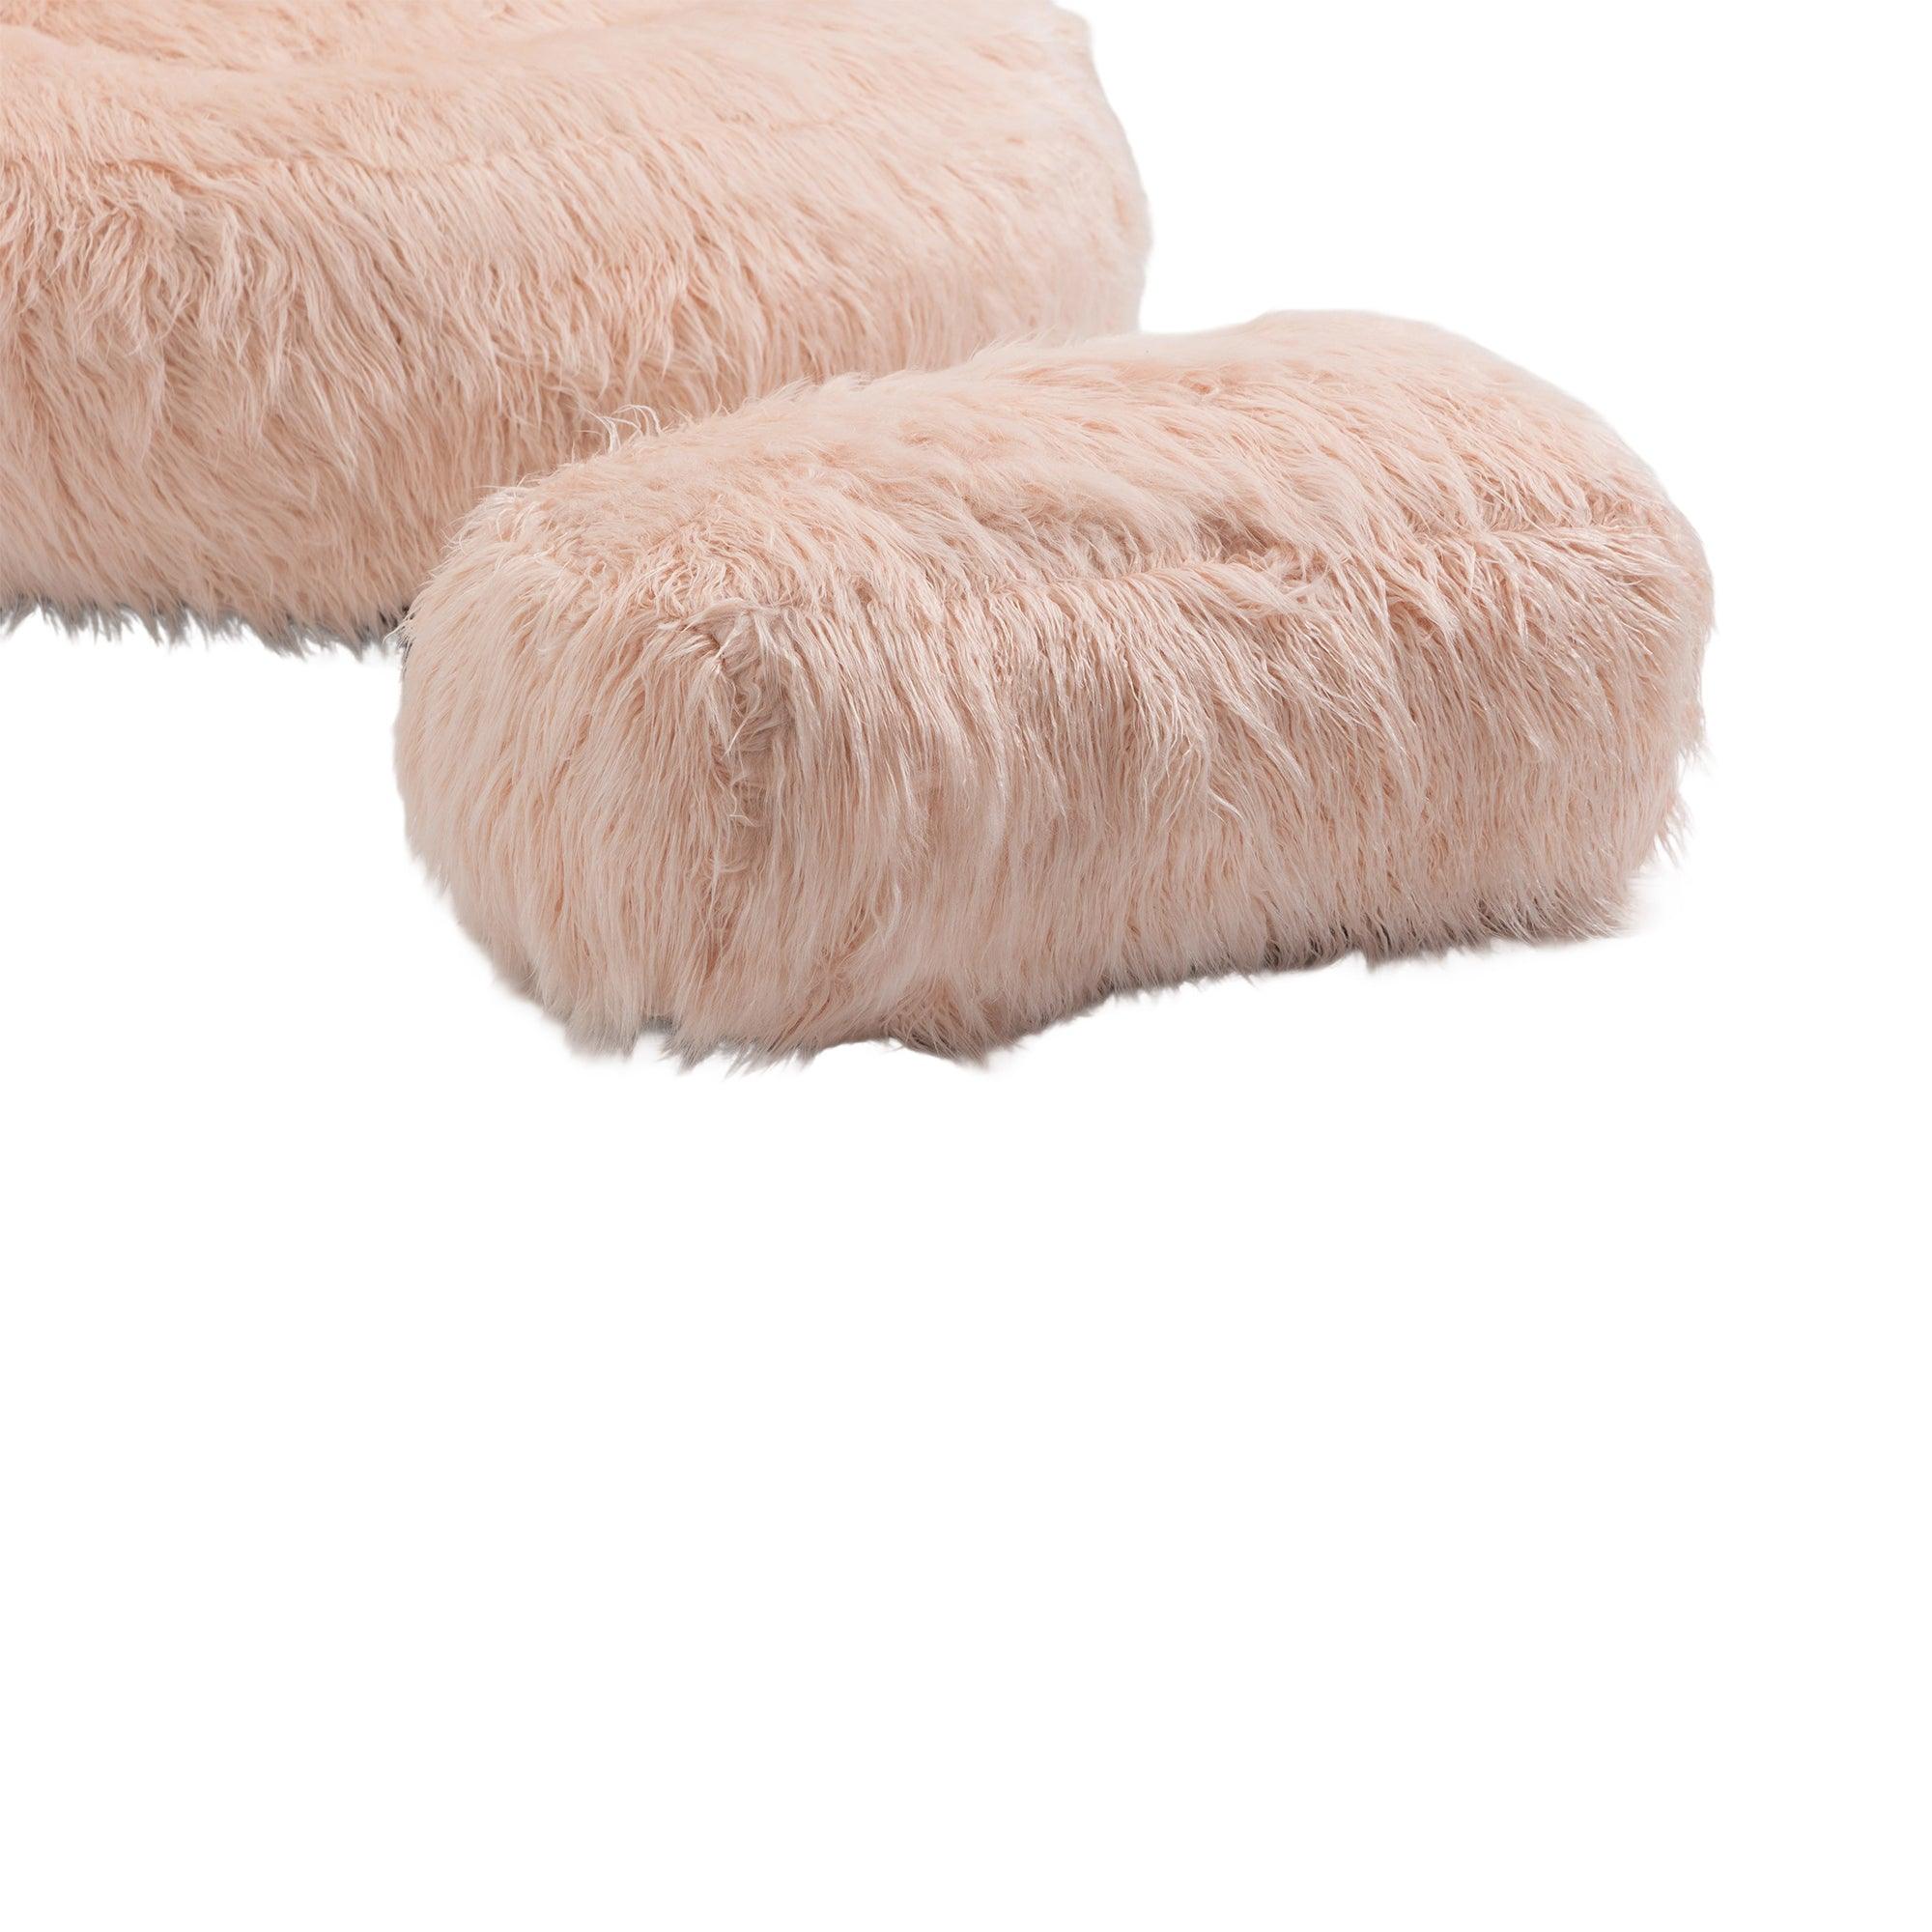 Gramanda Bean Bag Faux Fur Lazy Sofa + Footstool For Adults And Kids - Pink